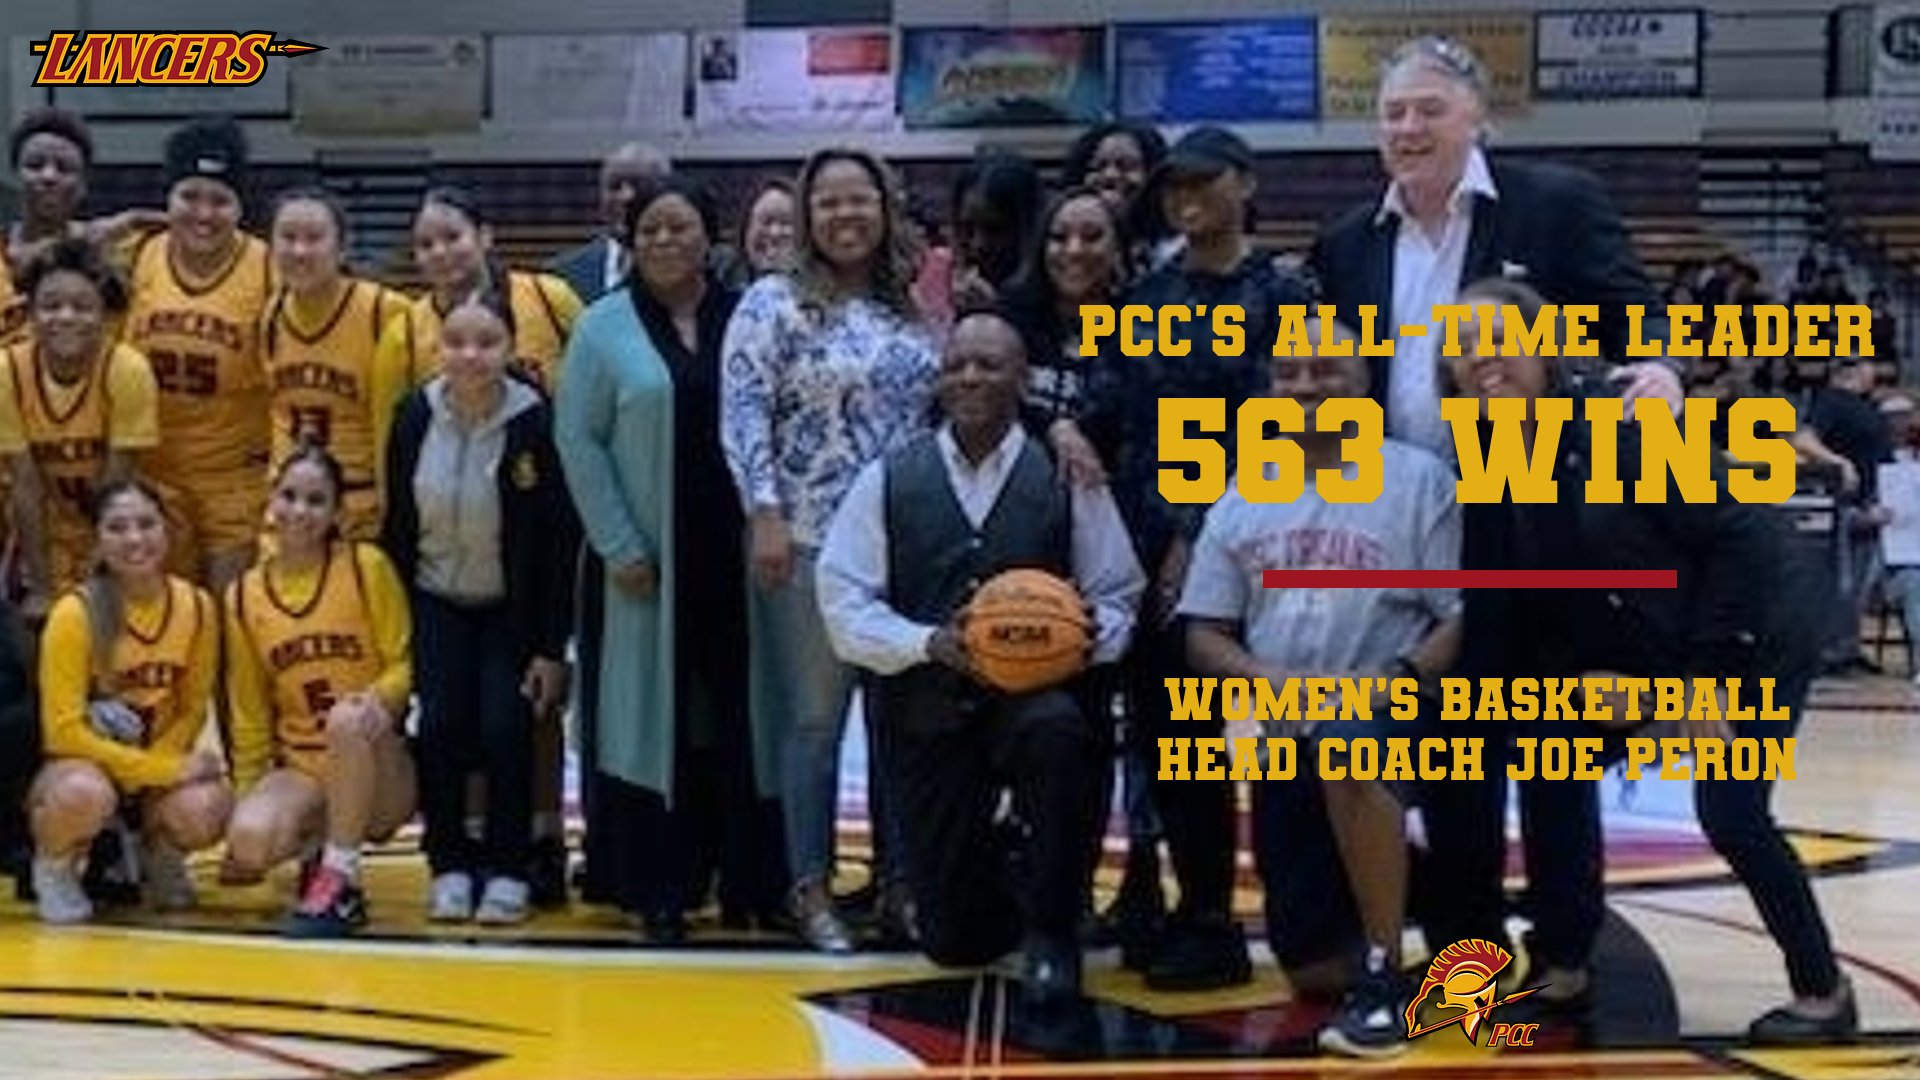 Historic Win #563 For PCC Women's Basketball Coach Joe Peron